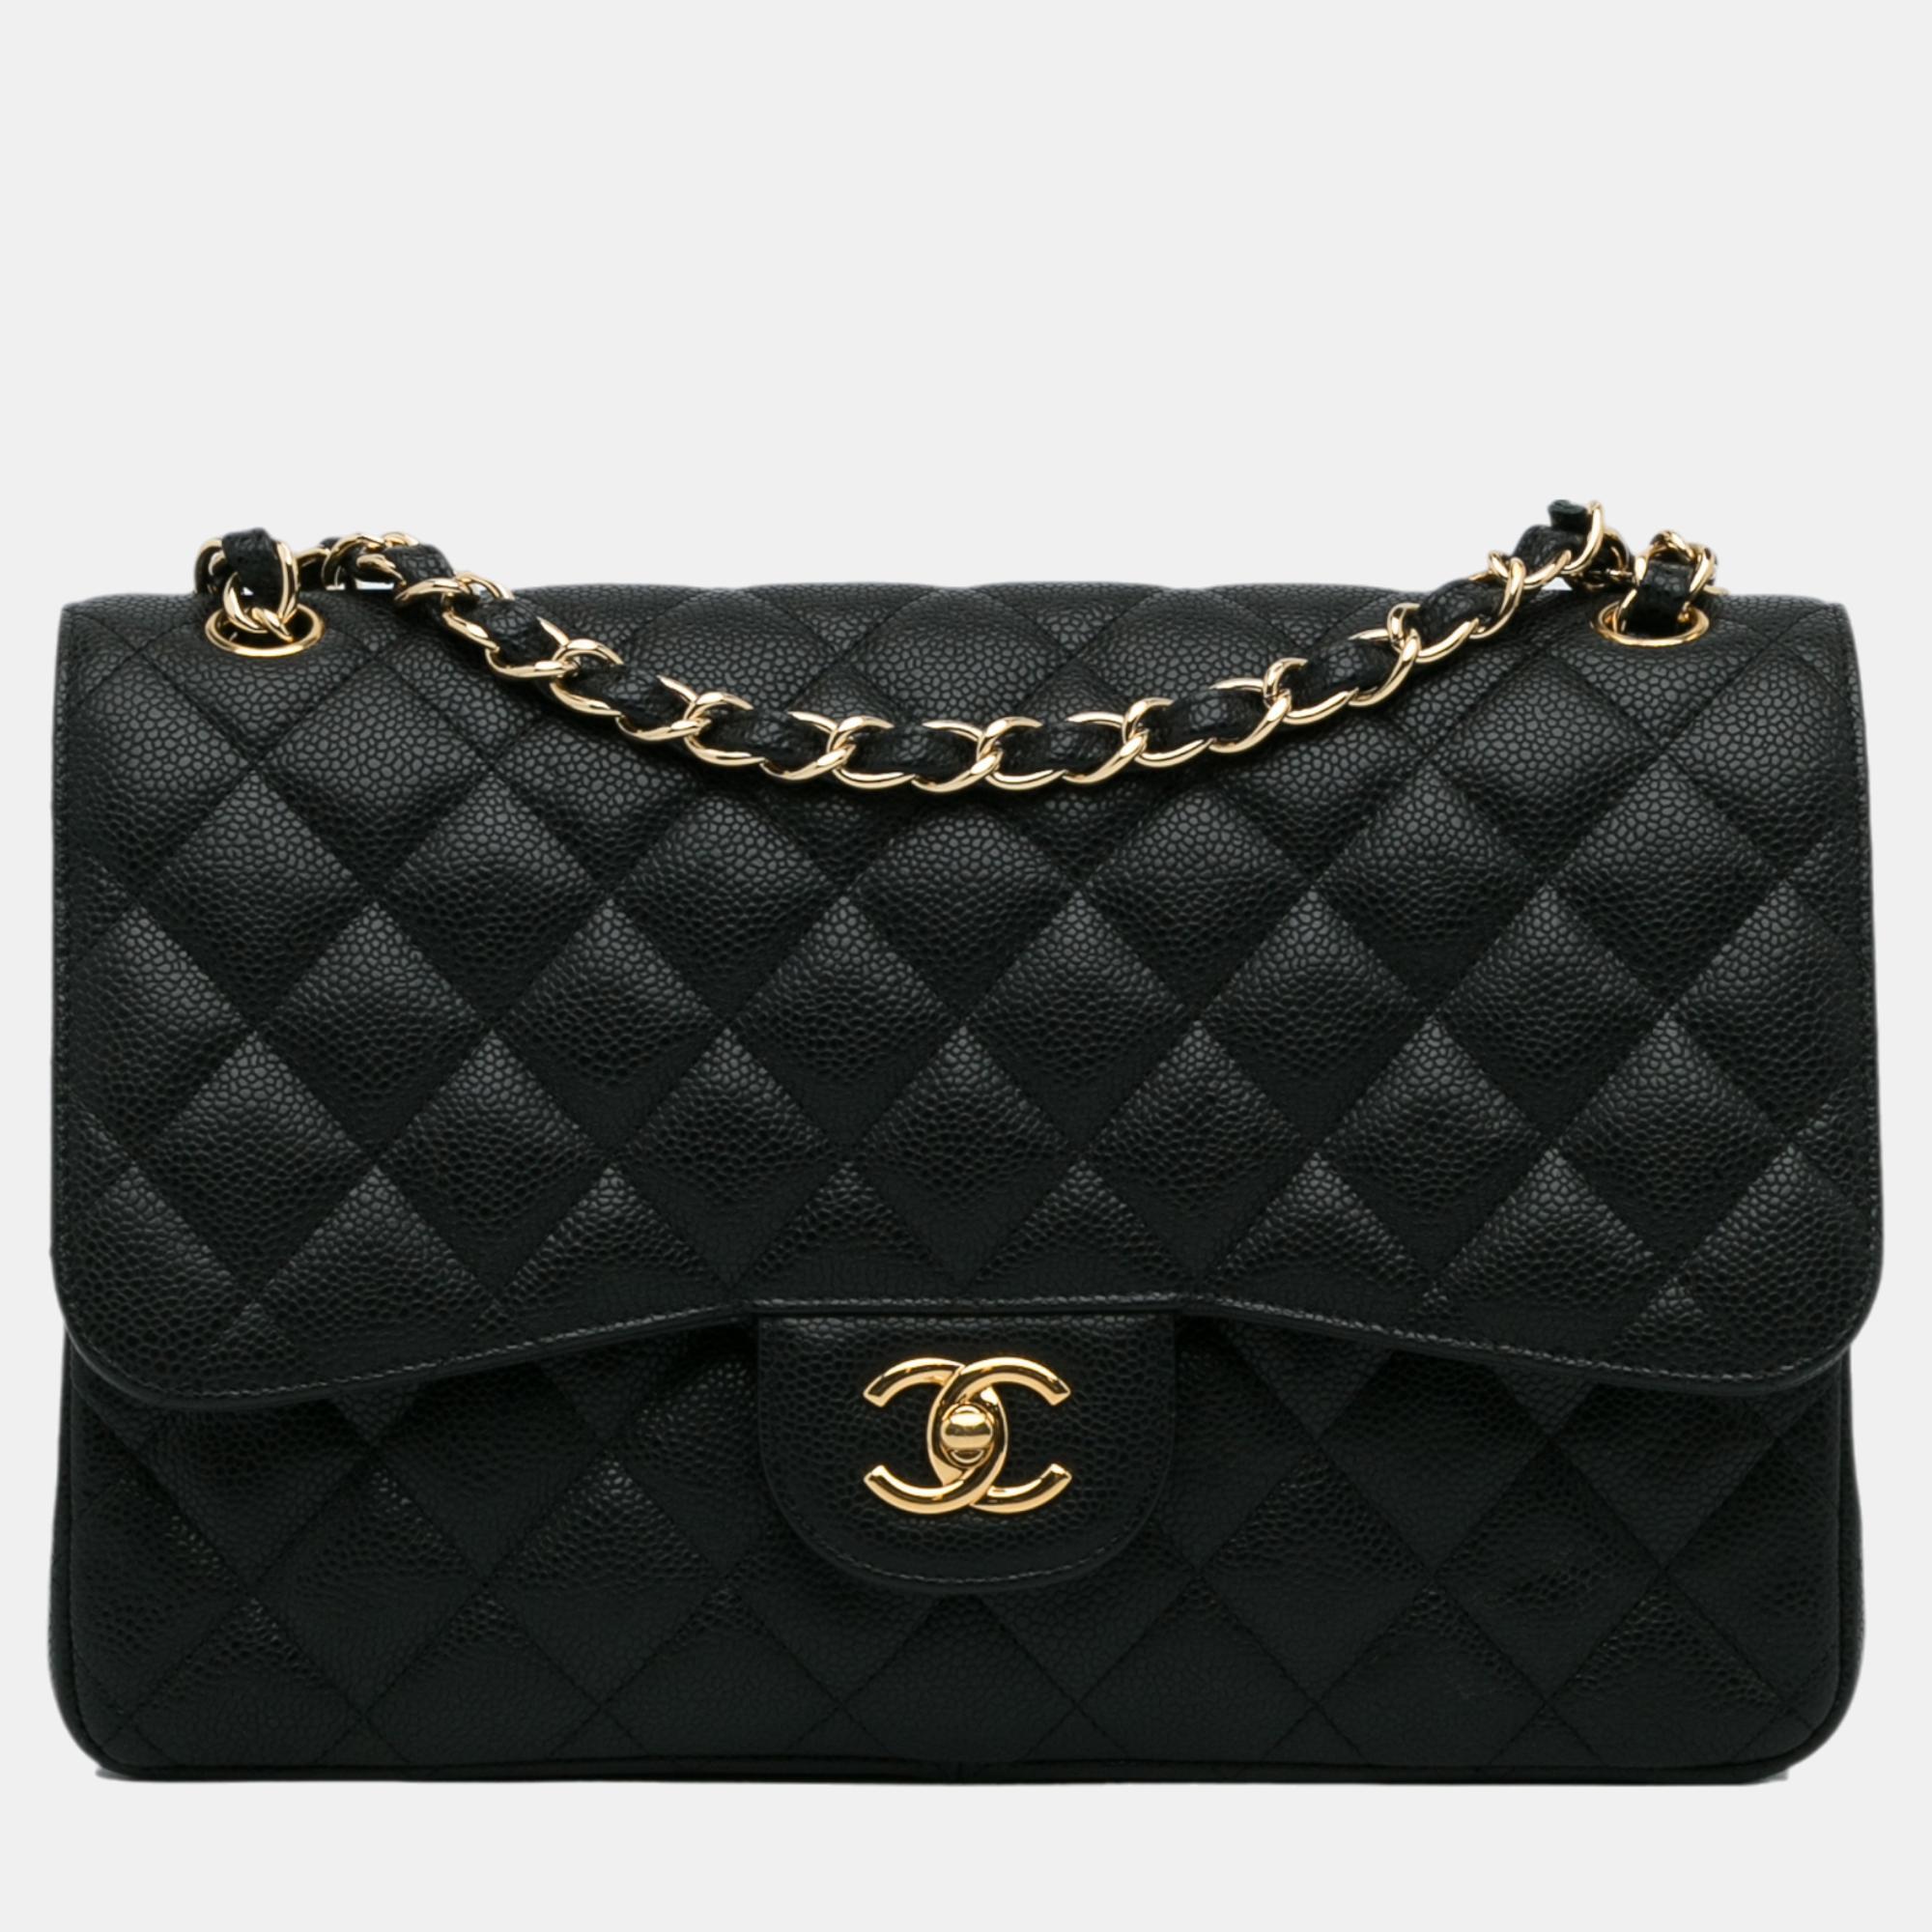 Chanel black jumbo classic caviar single flap bag